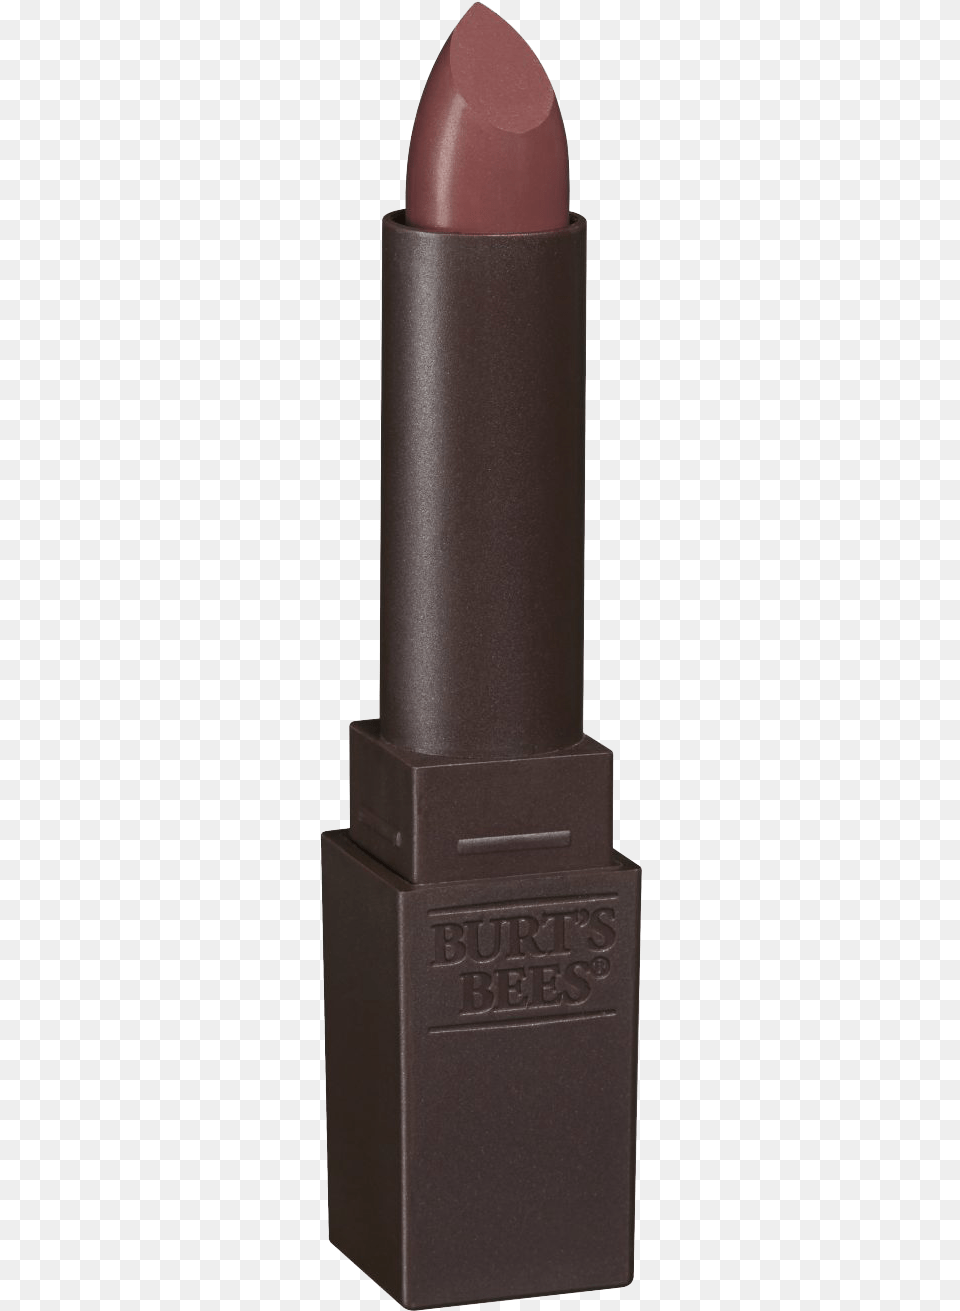 Bees Blush Basin Lipstick Nars Lipstick, Cosmetics Png Image